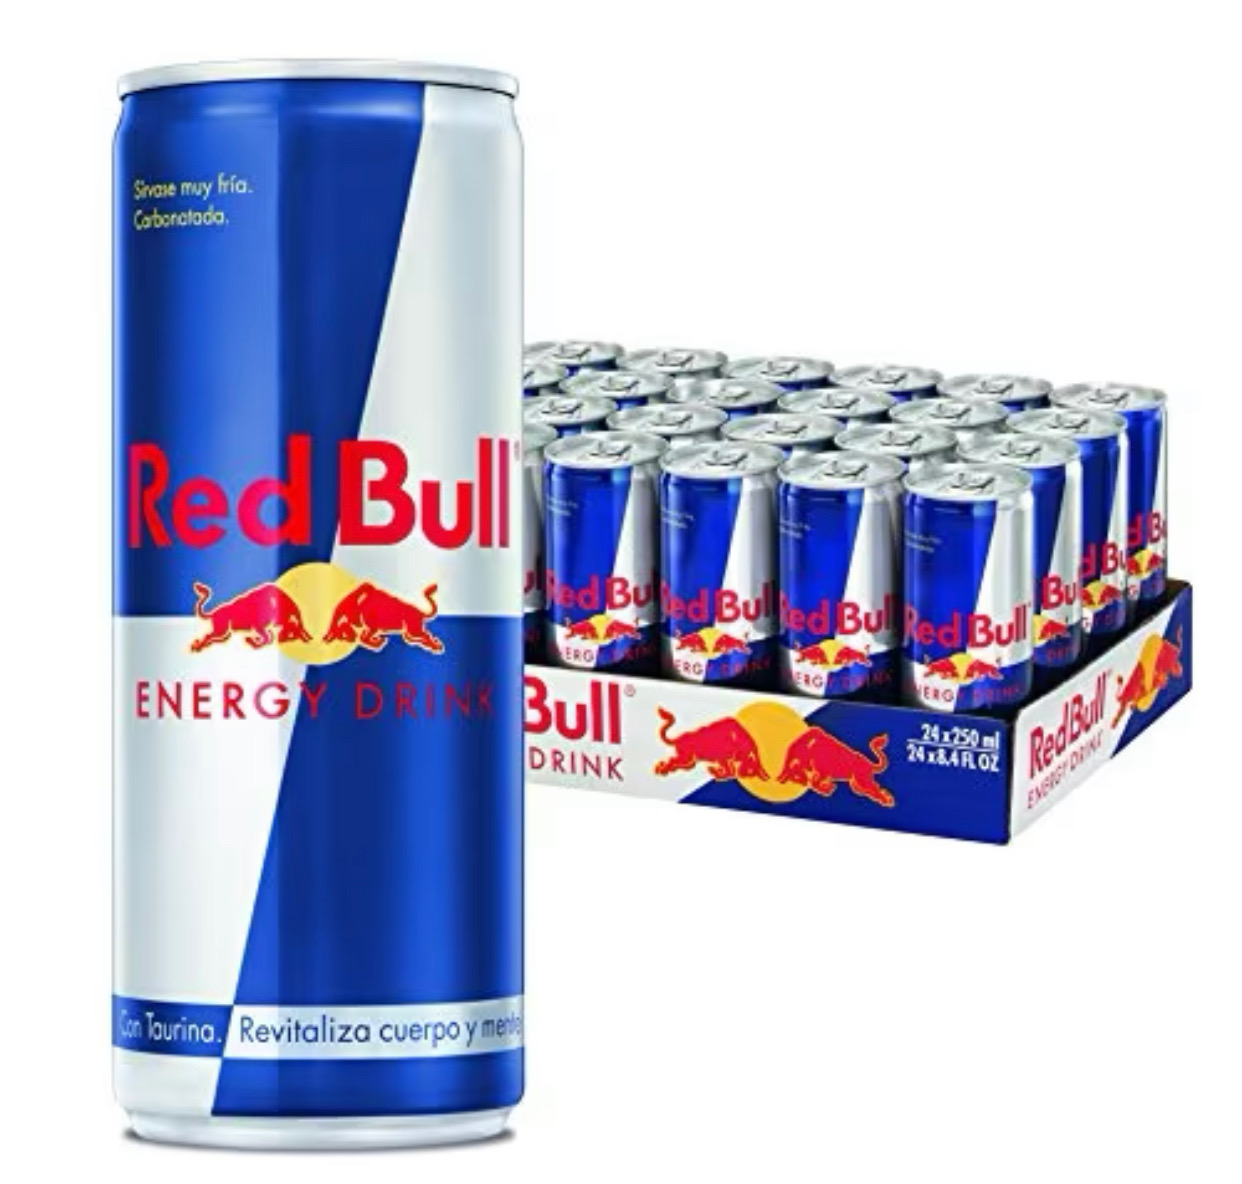 😍 24x Red Bull für 18,41€ (statt 35,76€) - 0,77€ pro Dose! ⚡️